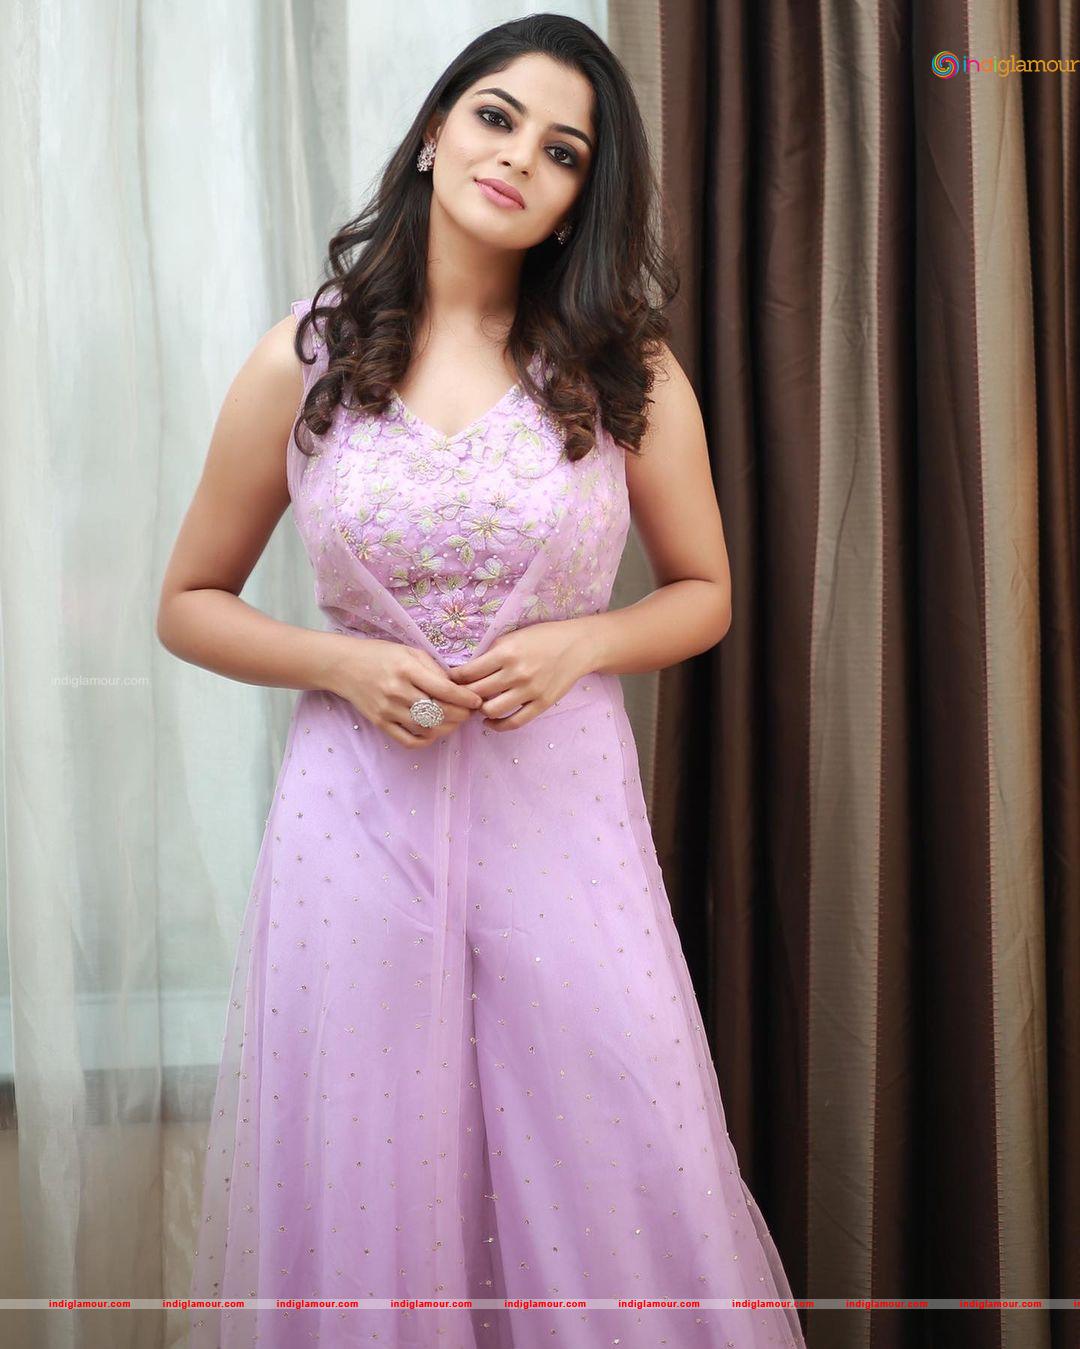 Nikhila Vimal Actress Photoimagepics And Stills 515464